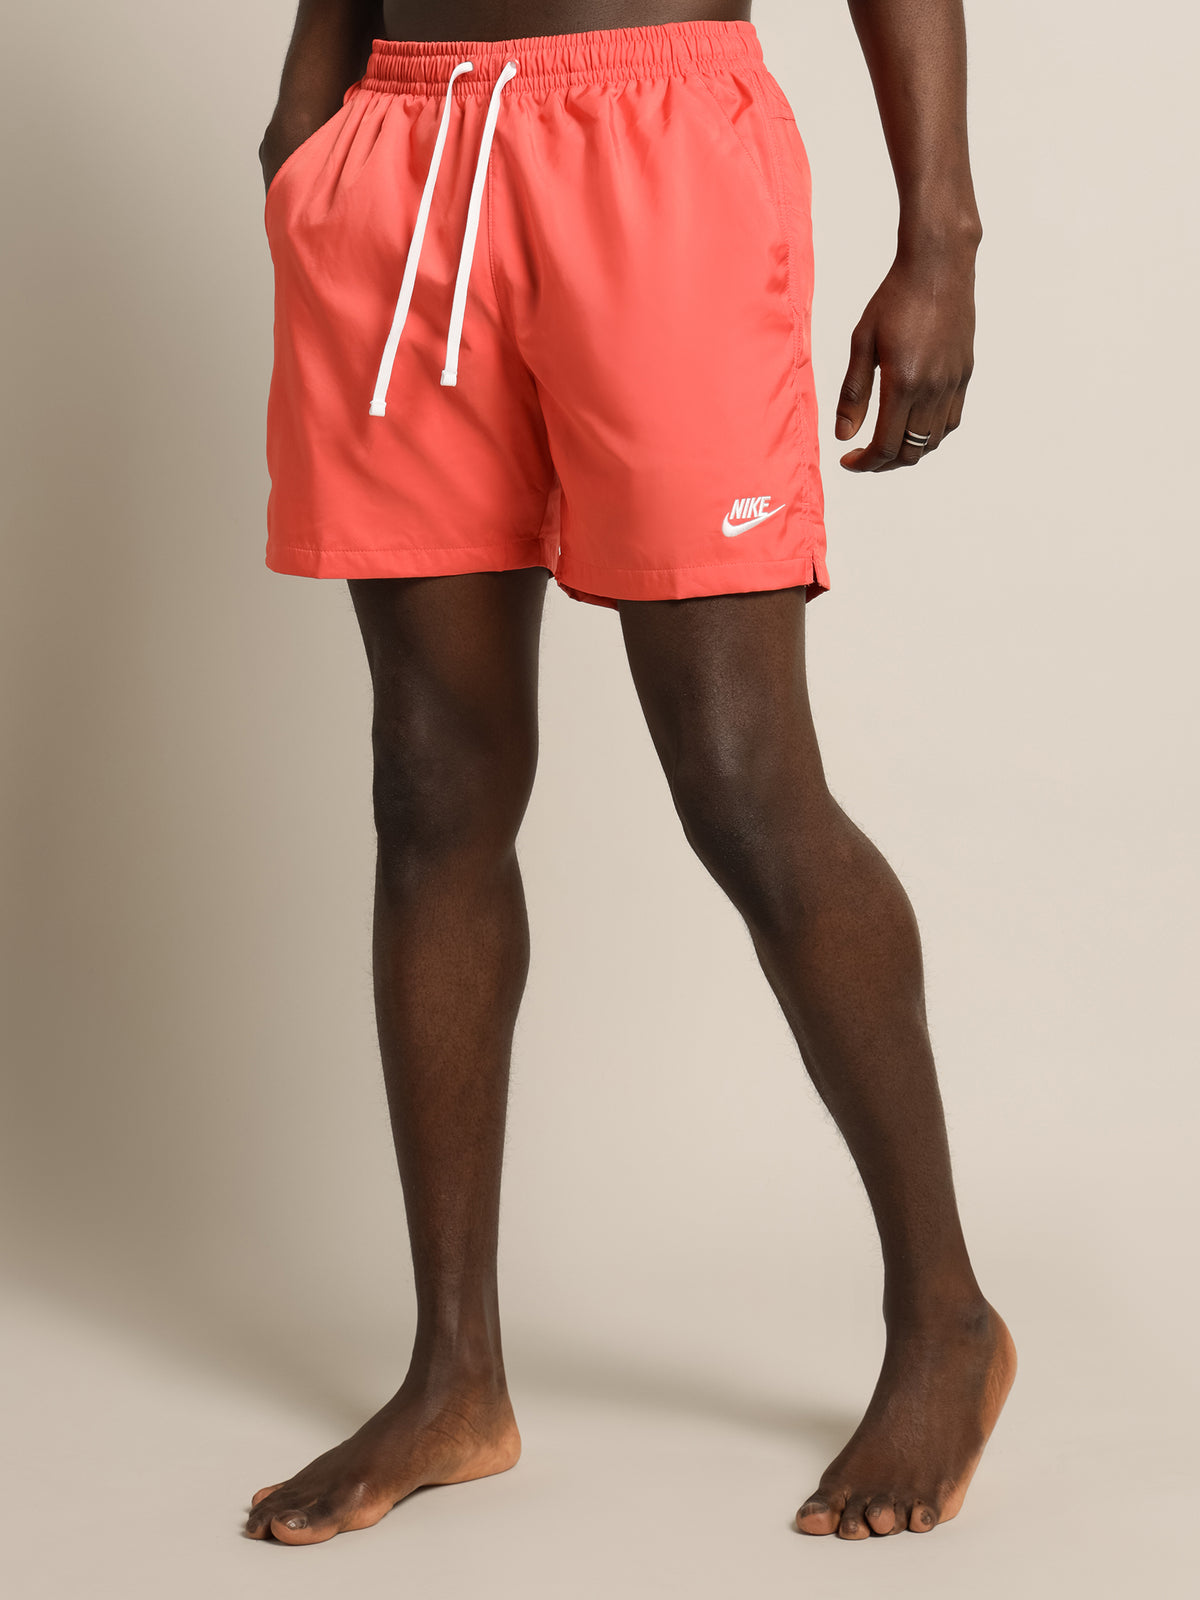 NSW Woven Shorts in Magic Ember Orange